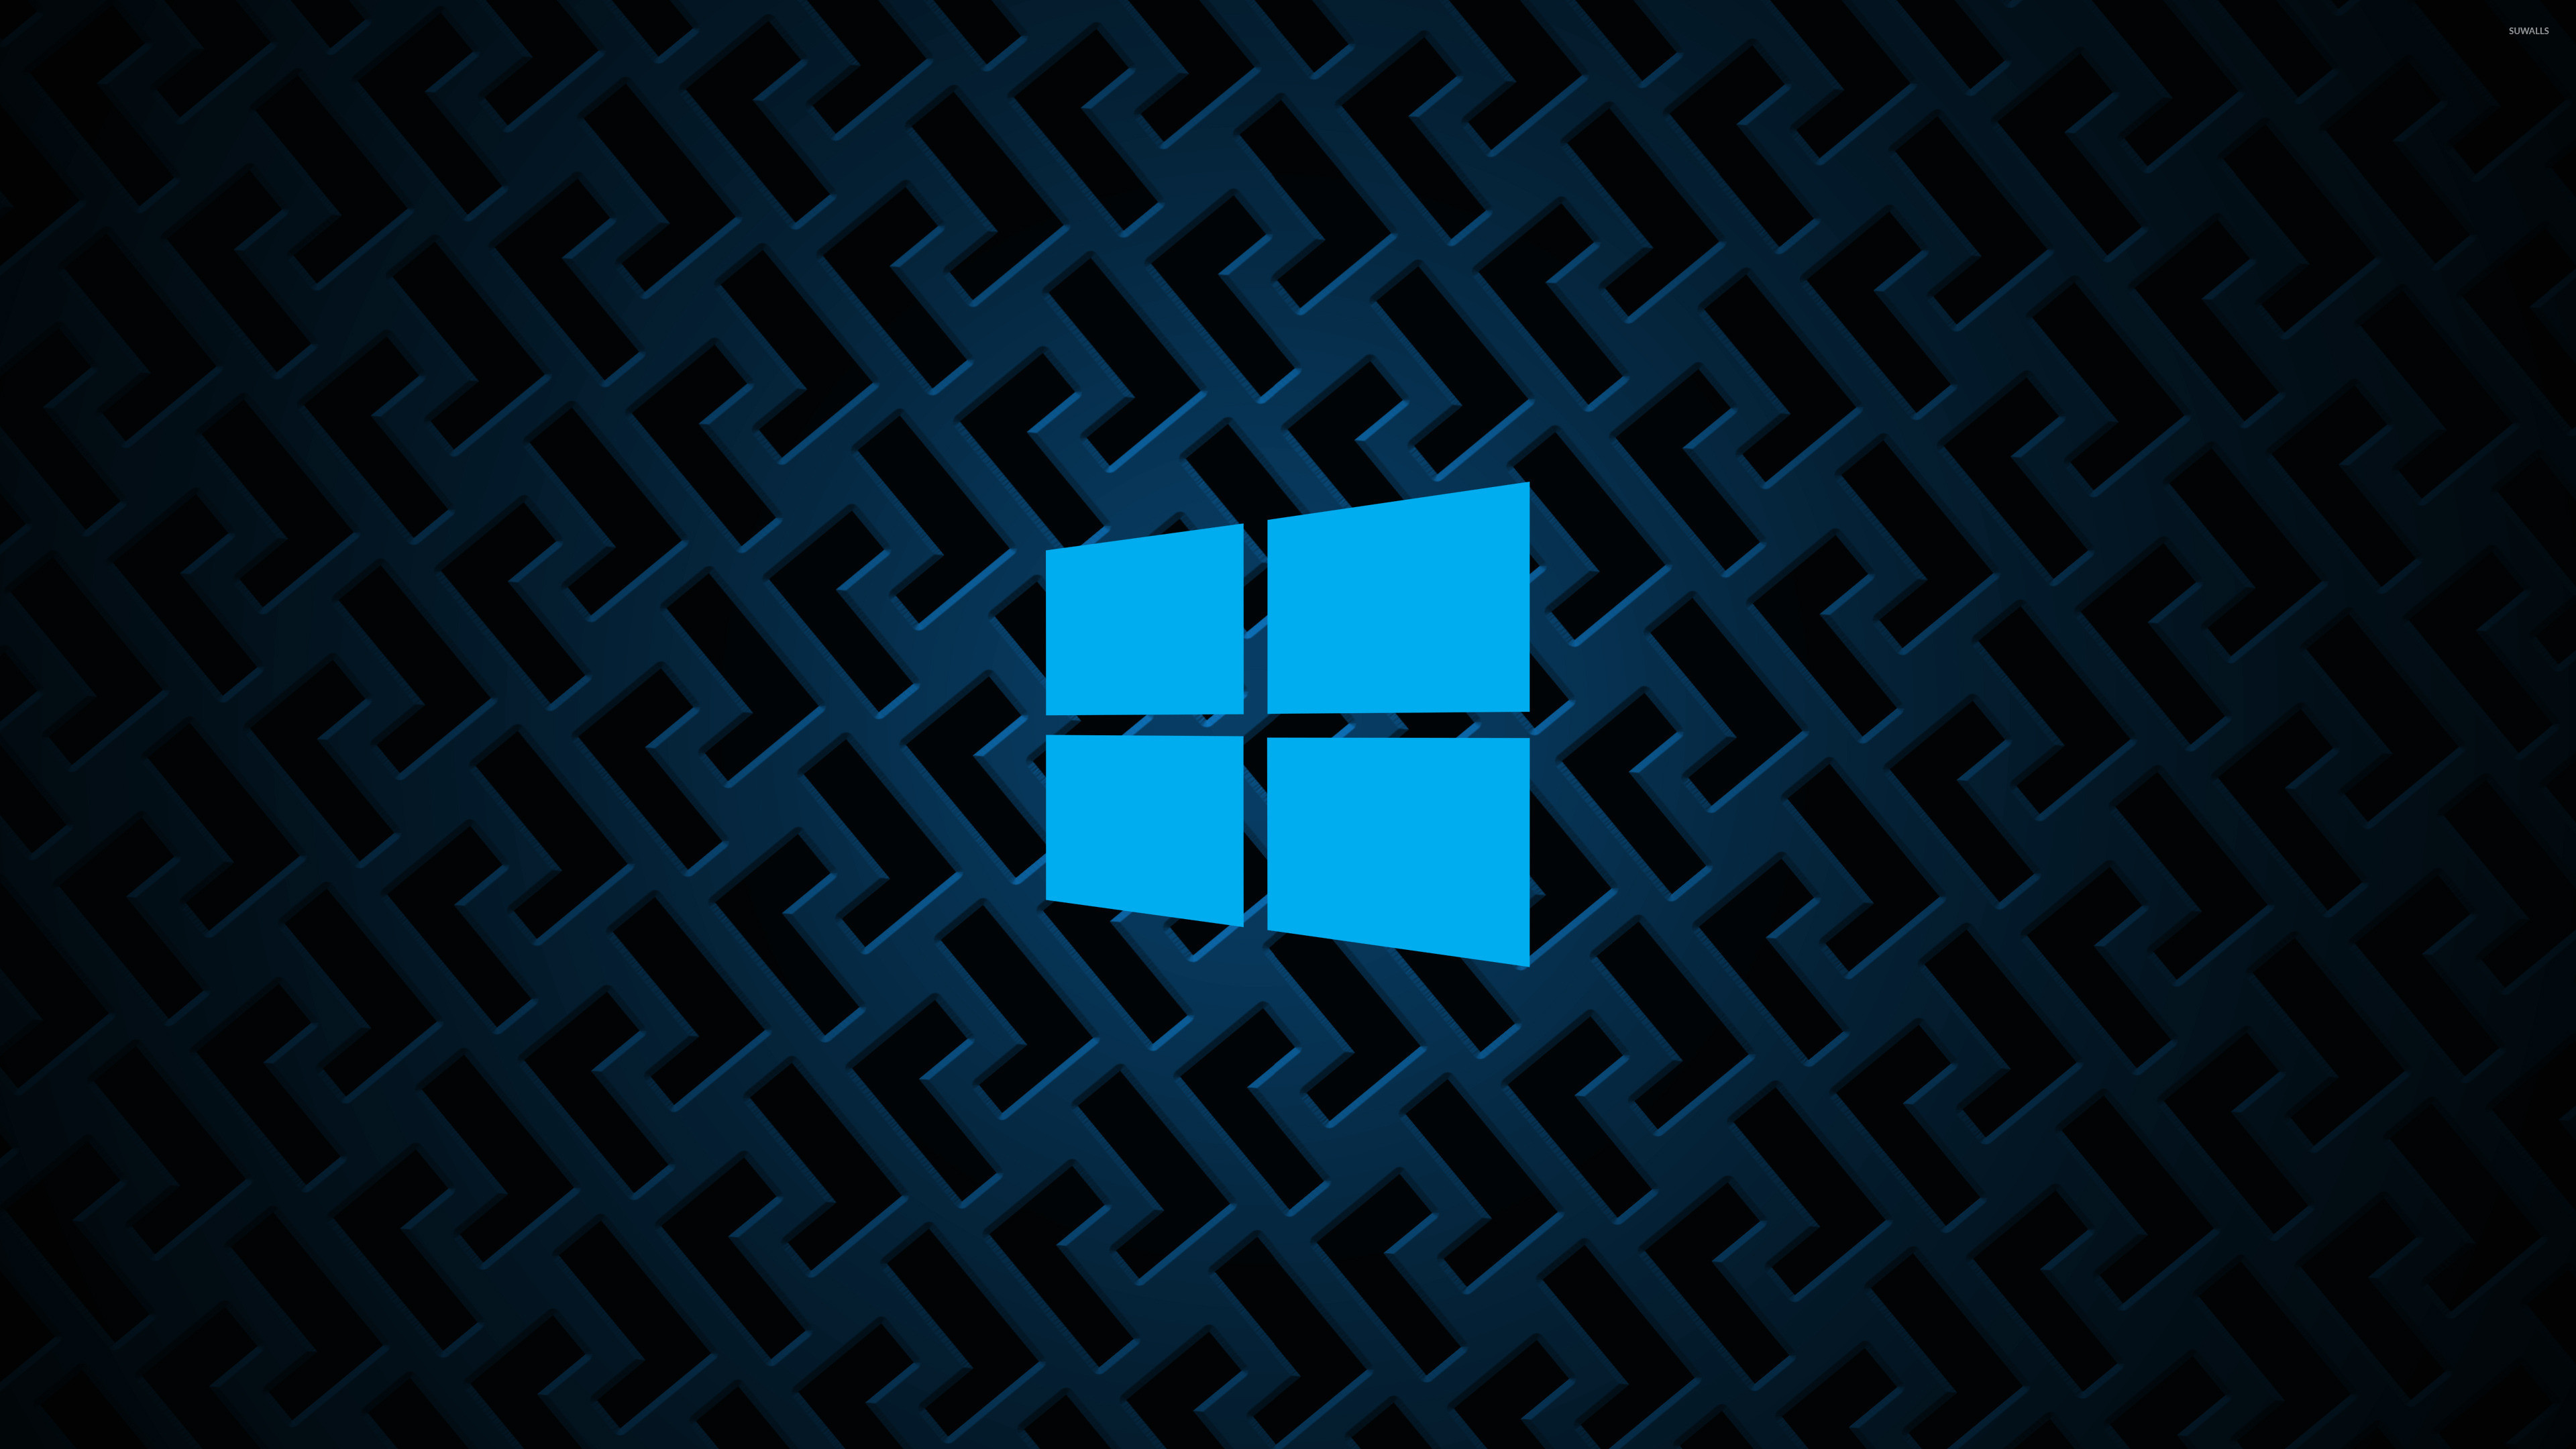 3840x2160 Windows 10 on metallic grid simple blue logo wallpaper